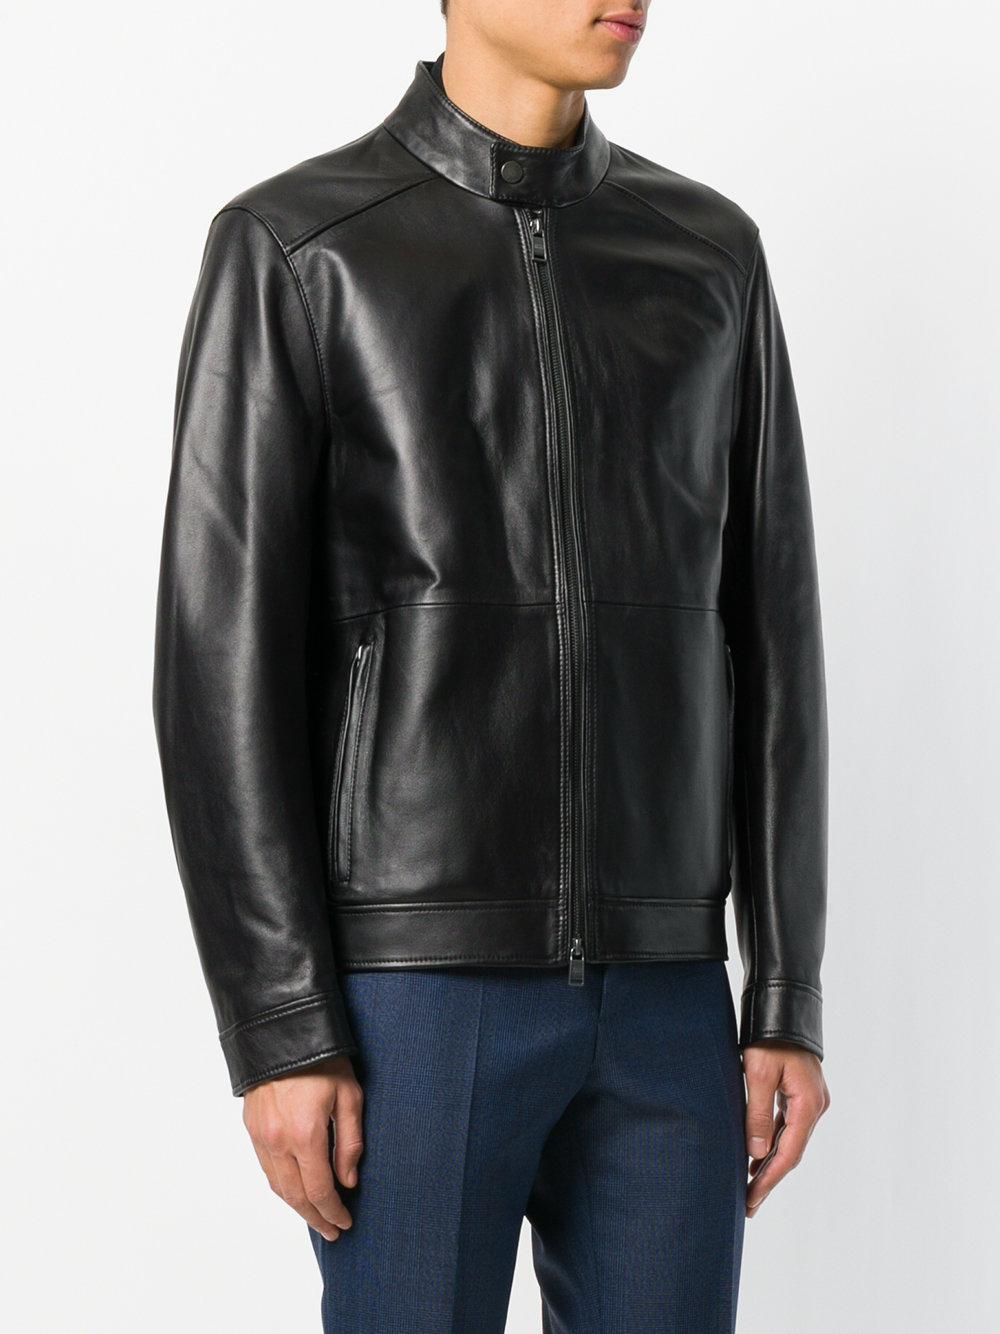 Lyst - Boss Leather Jacket in Black for Men